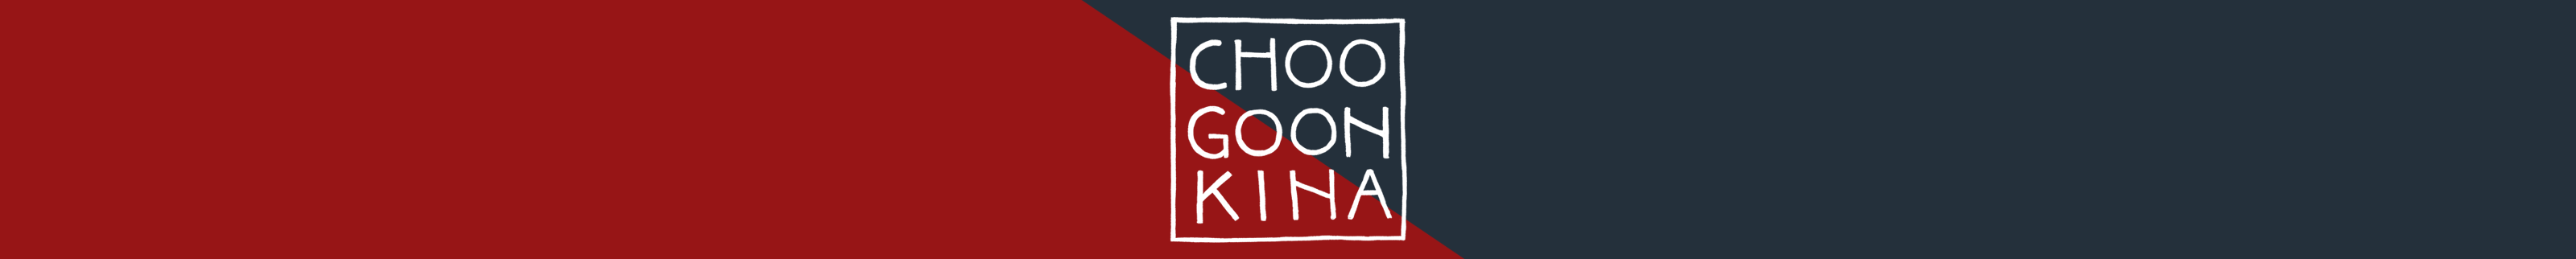 Kato Choogoonkina のプロファイルバナー